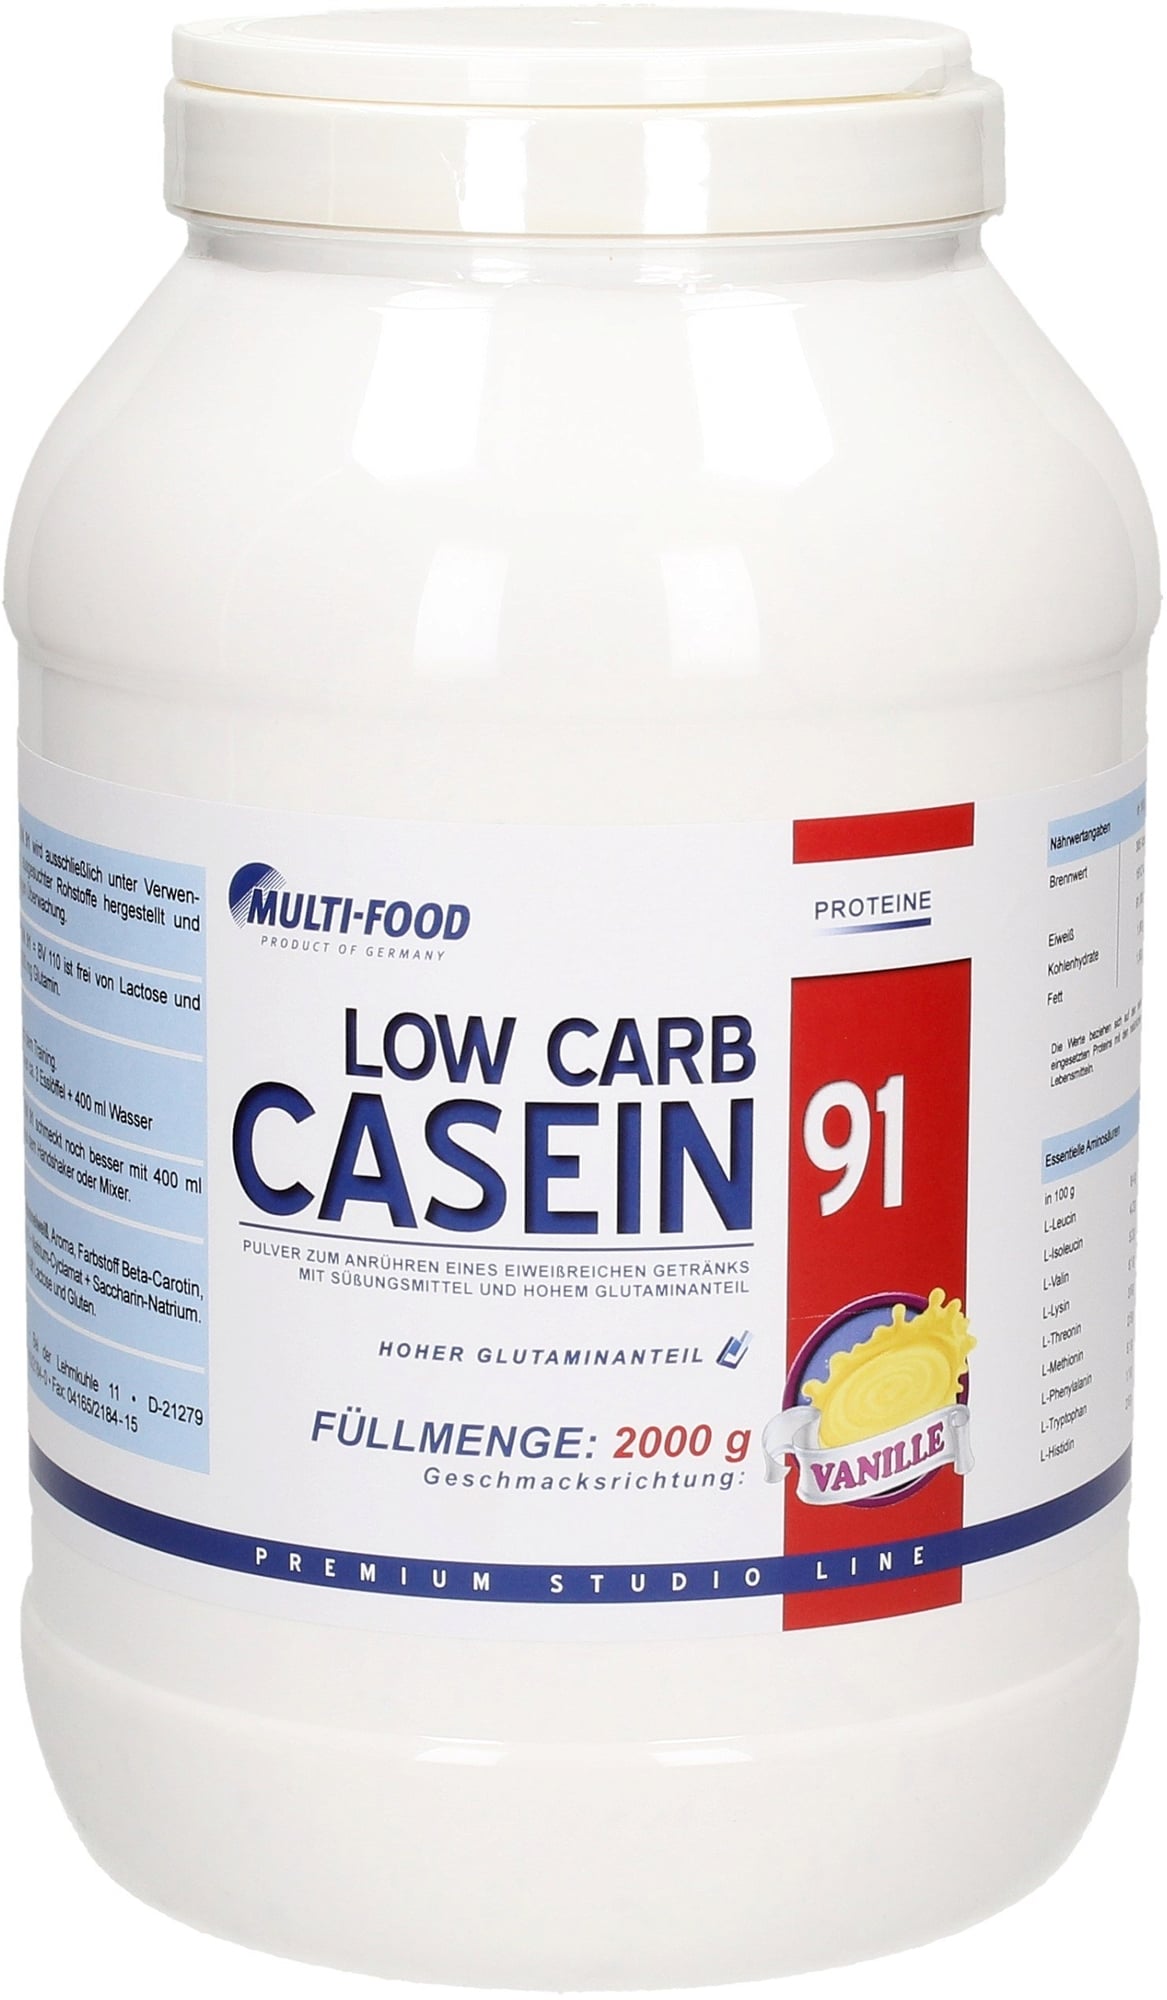 Multi-Food LOW CARB CASEIN 91, 2000g Dose - Vanille